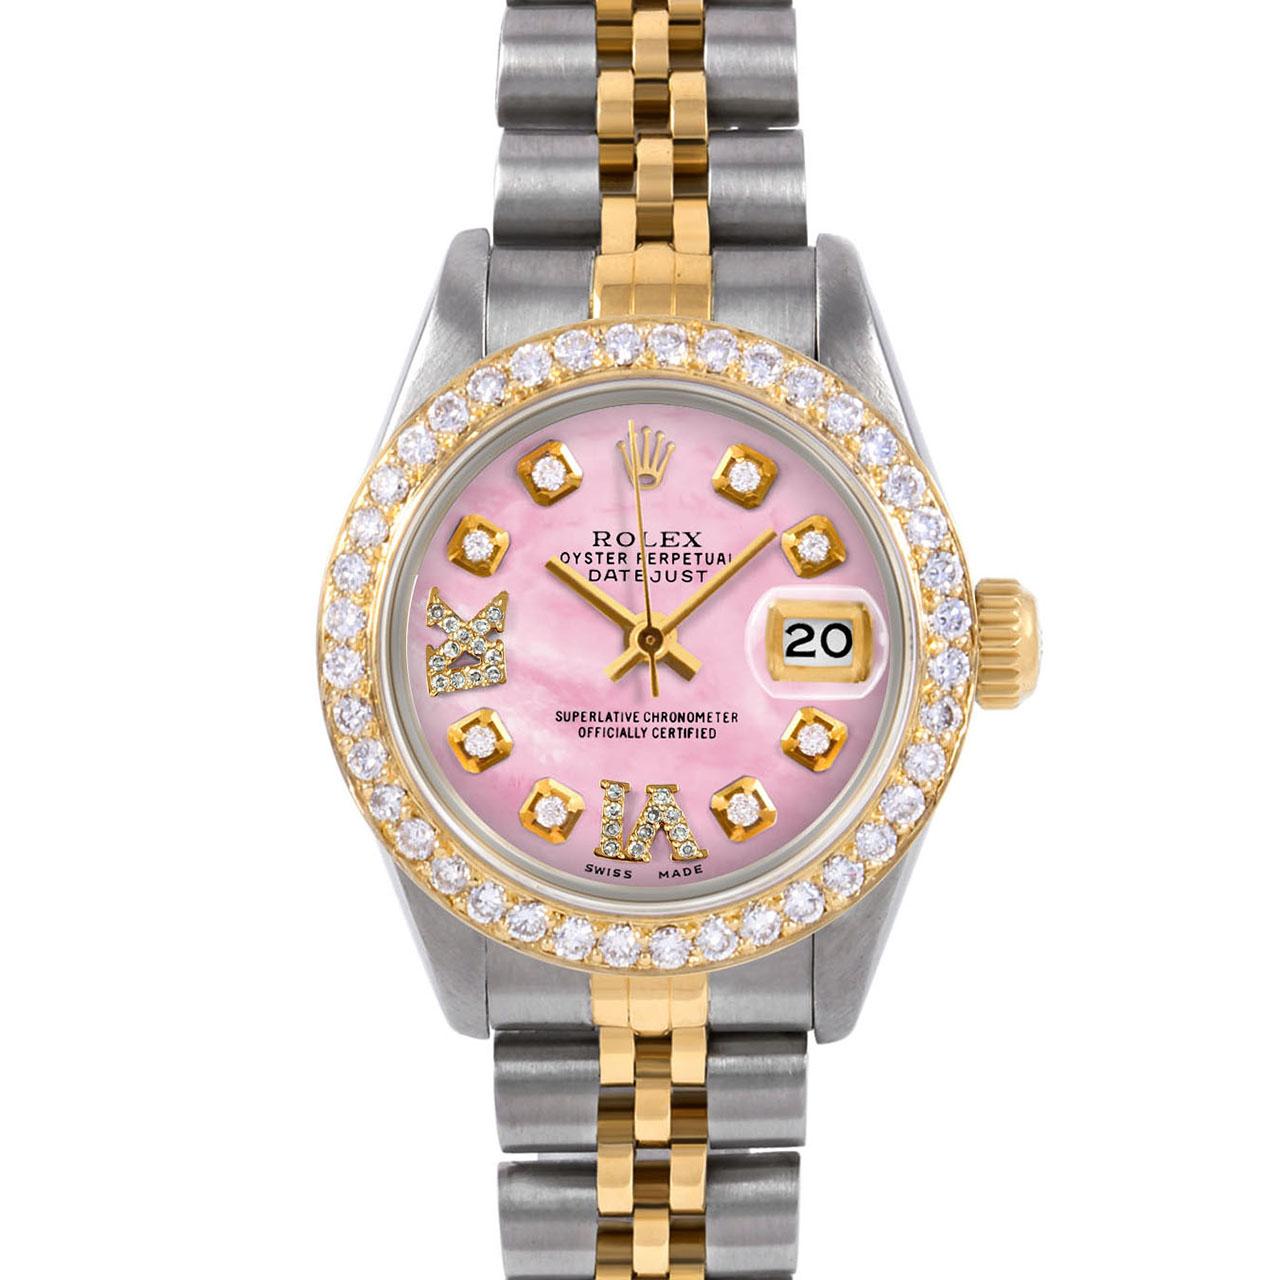 Swiss Wrist - SKU 6917-TT-PMOP-8DR69-BDS-JUB

Brand : Rolex
Model : Datejust (Non-Quickset Model)
Gender : Ladies
Metals : 14K/Stainless Steel
Case Size : 26 mm

Dial : Custom Pink Mother Of Pearl Roman Diamond Dial (This dial is not original Rolex